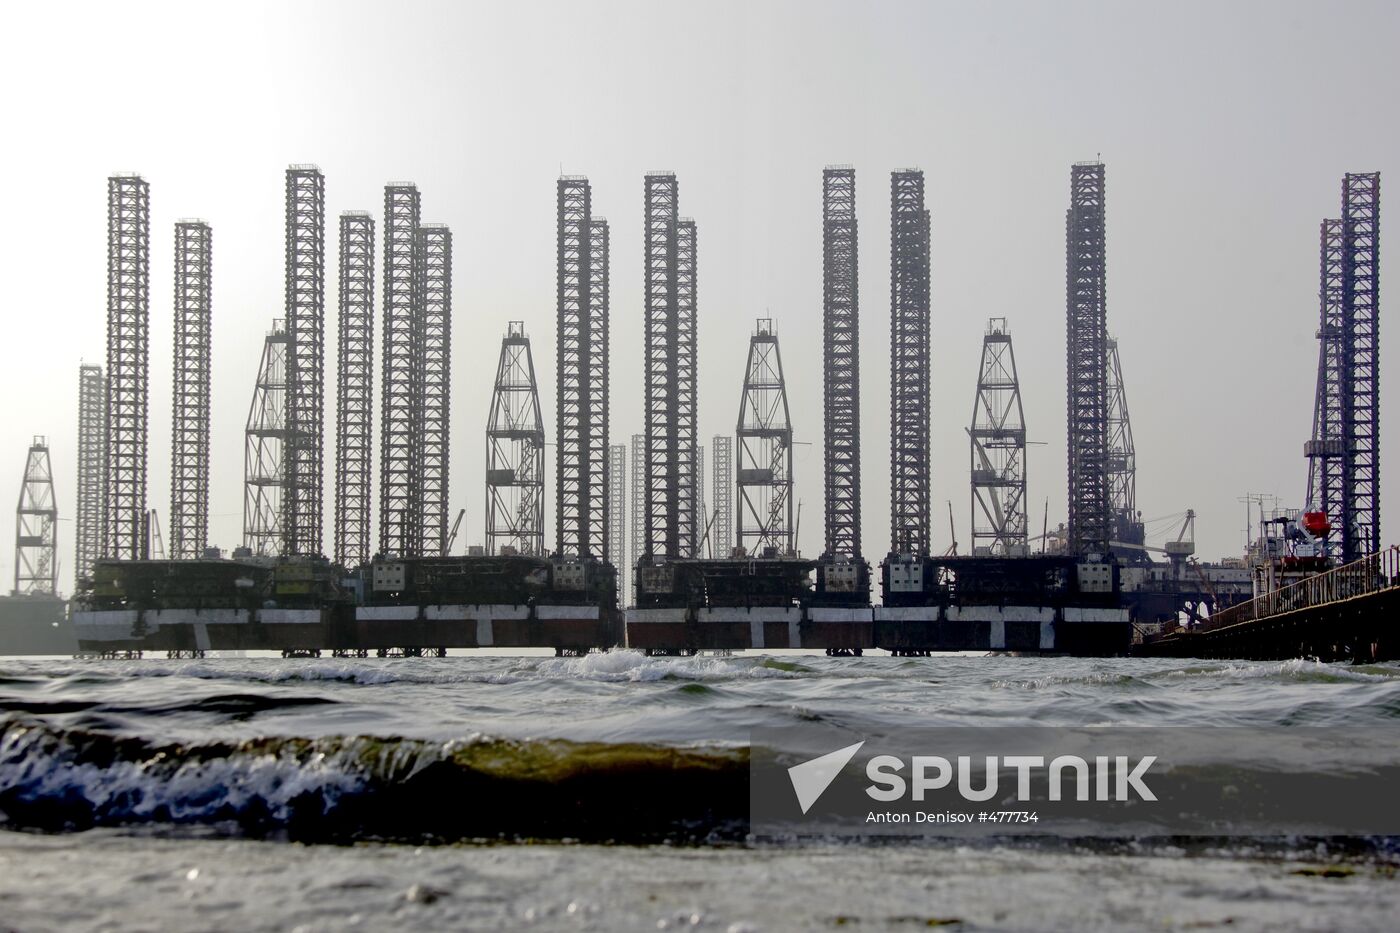 Oil rigs in the Caspian Sea